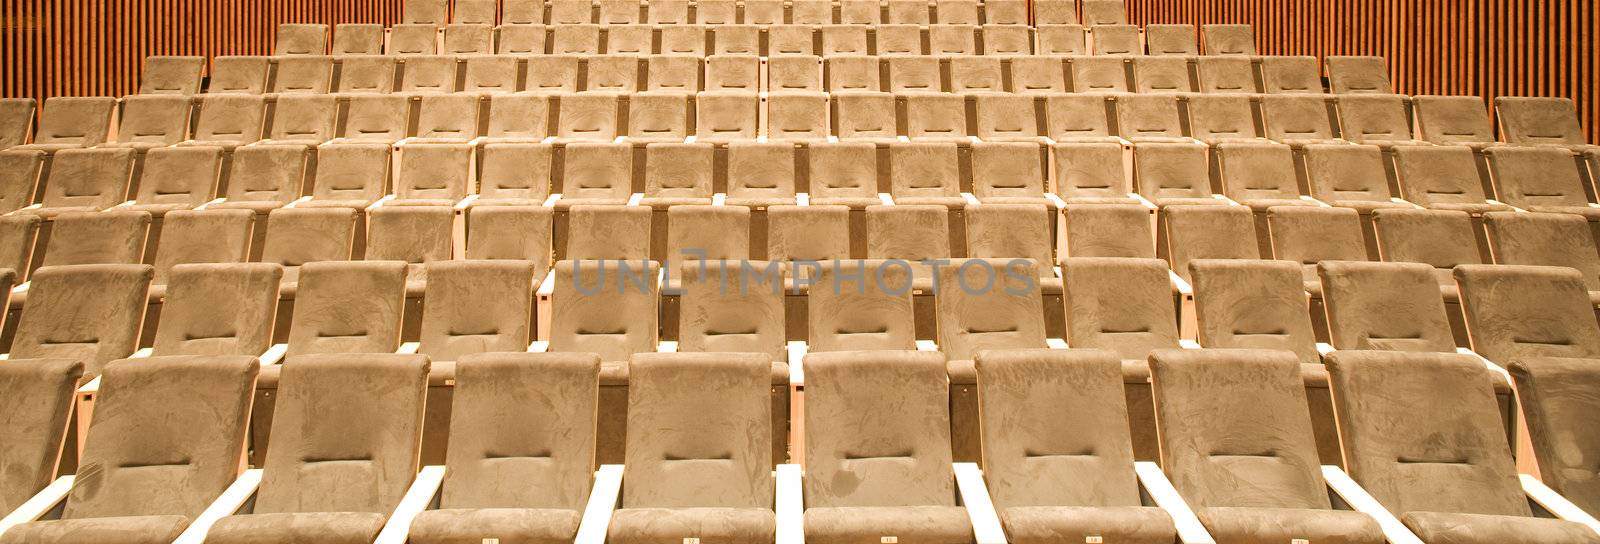 Empty seats by gemenacom